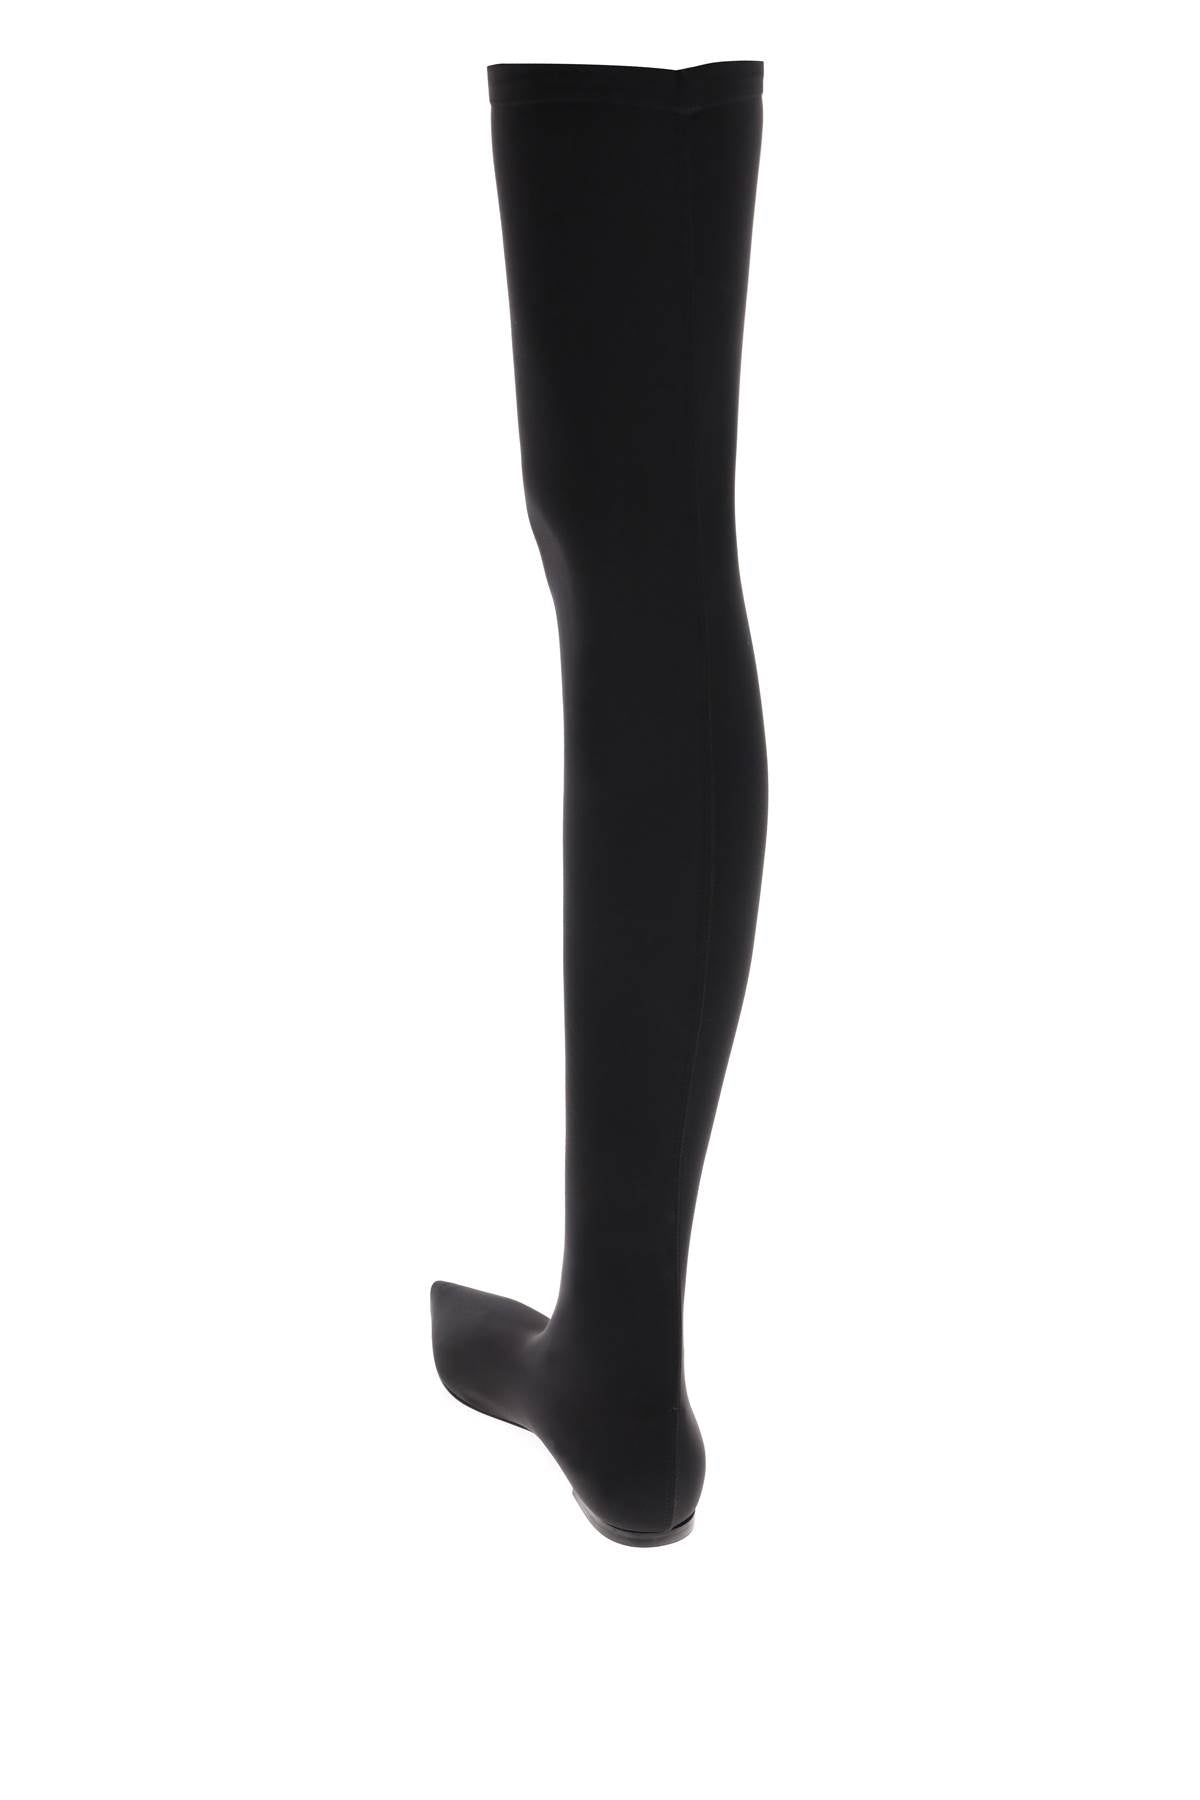 DOLCE & GABBANA Versatile Black Stretch Thigh-High Boots for Women